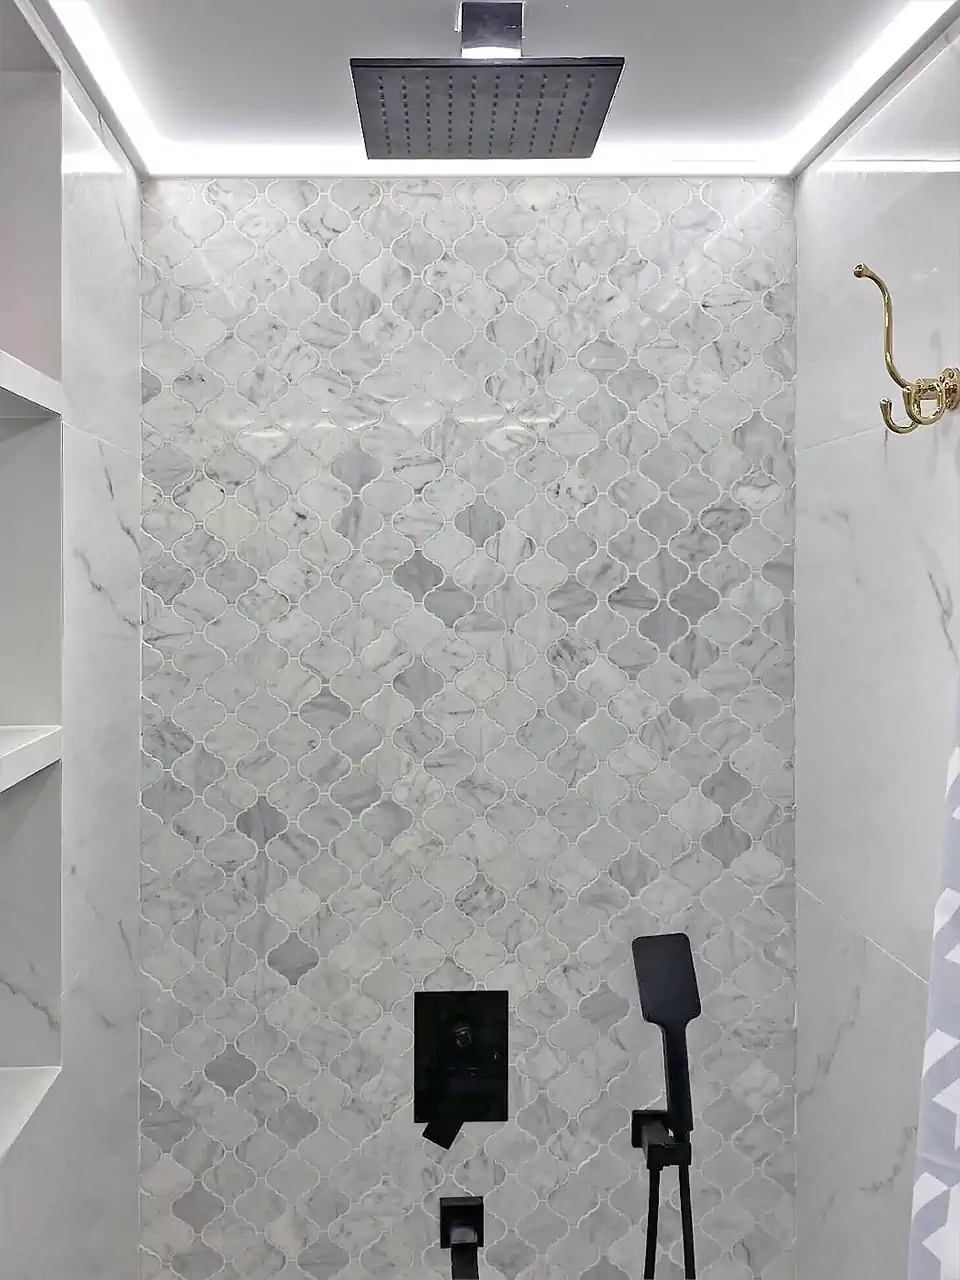 Arabesque Marble Tiles as the Shower Wall Tiles Design Ideas 01